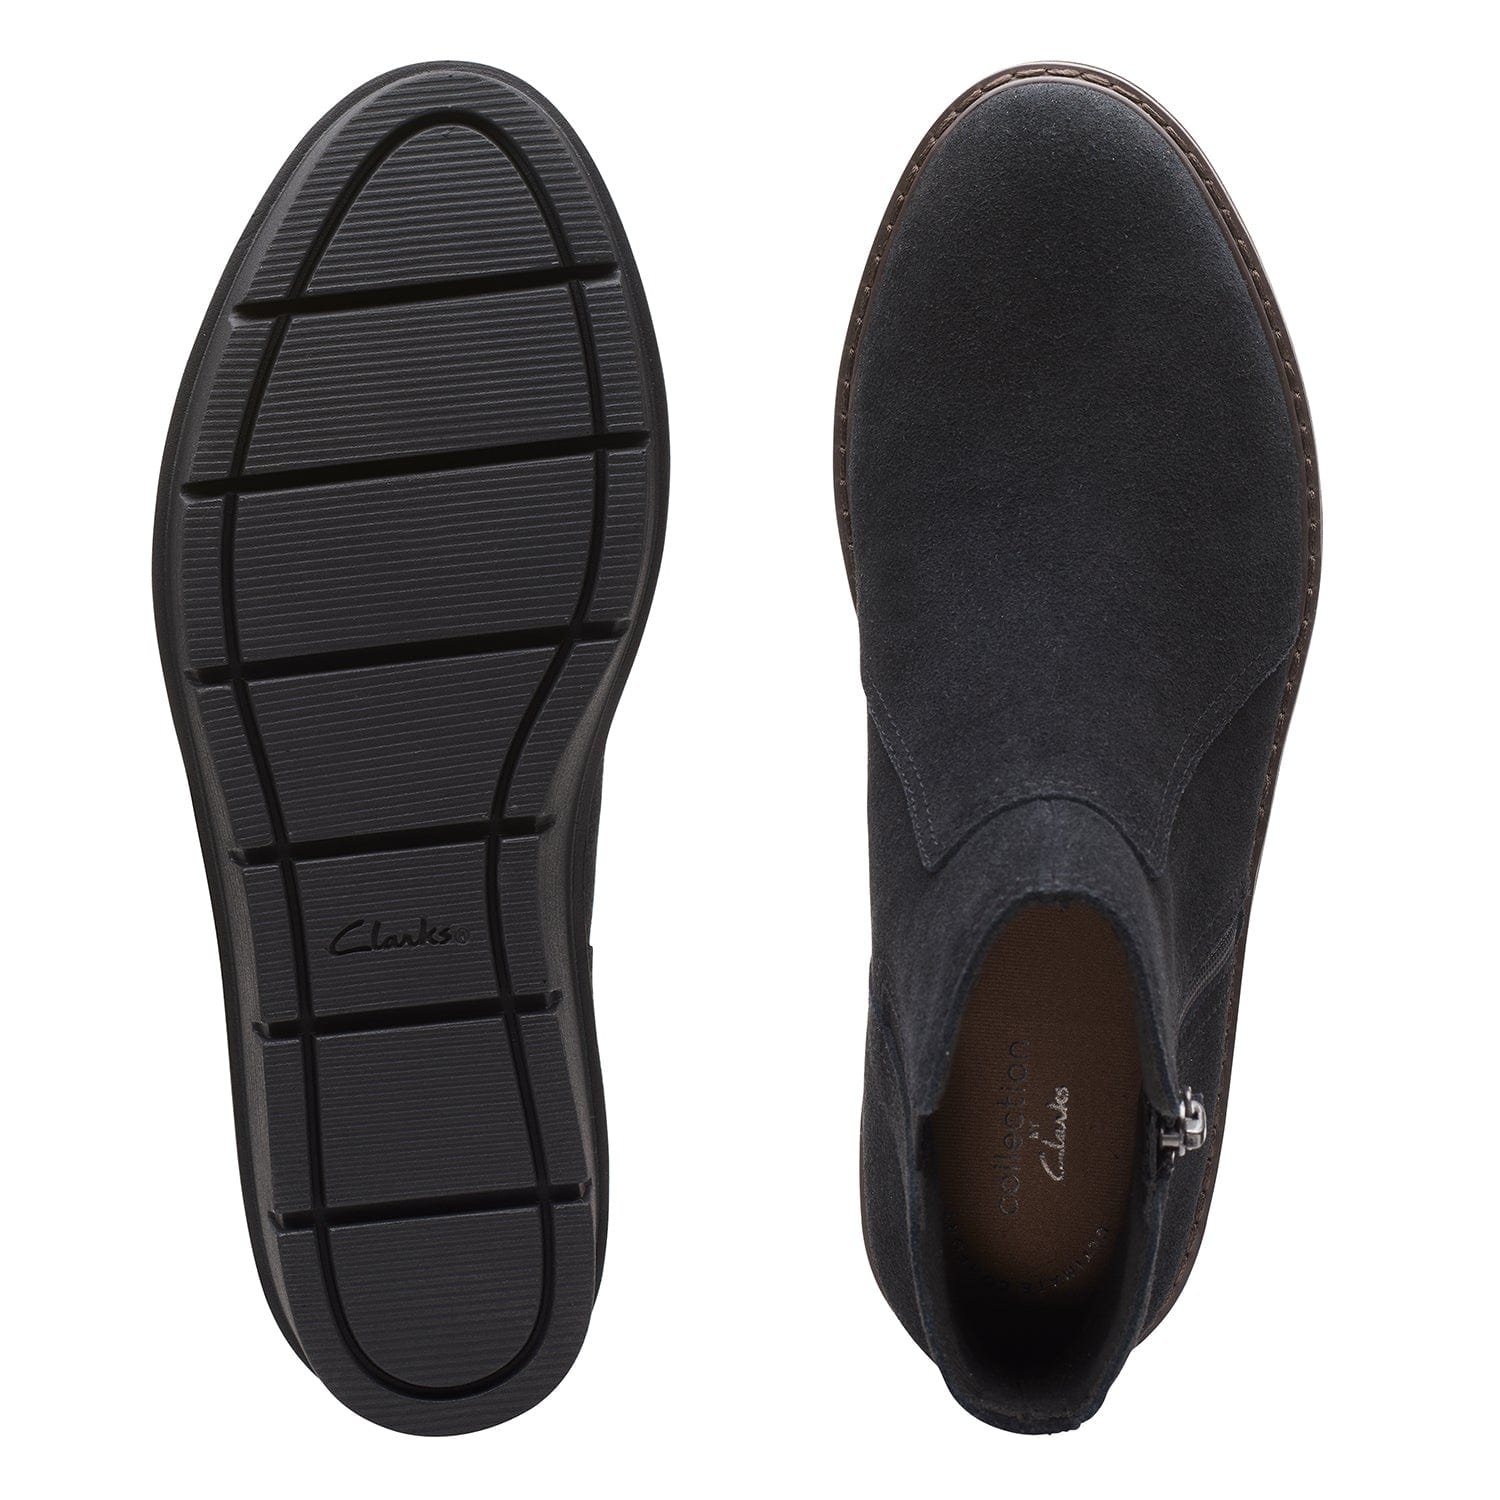 Clarks Airabell Zip Boots - Black Suede - 261633104 - D Width (Standard Fit)